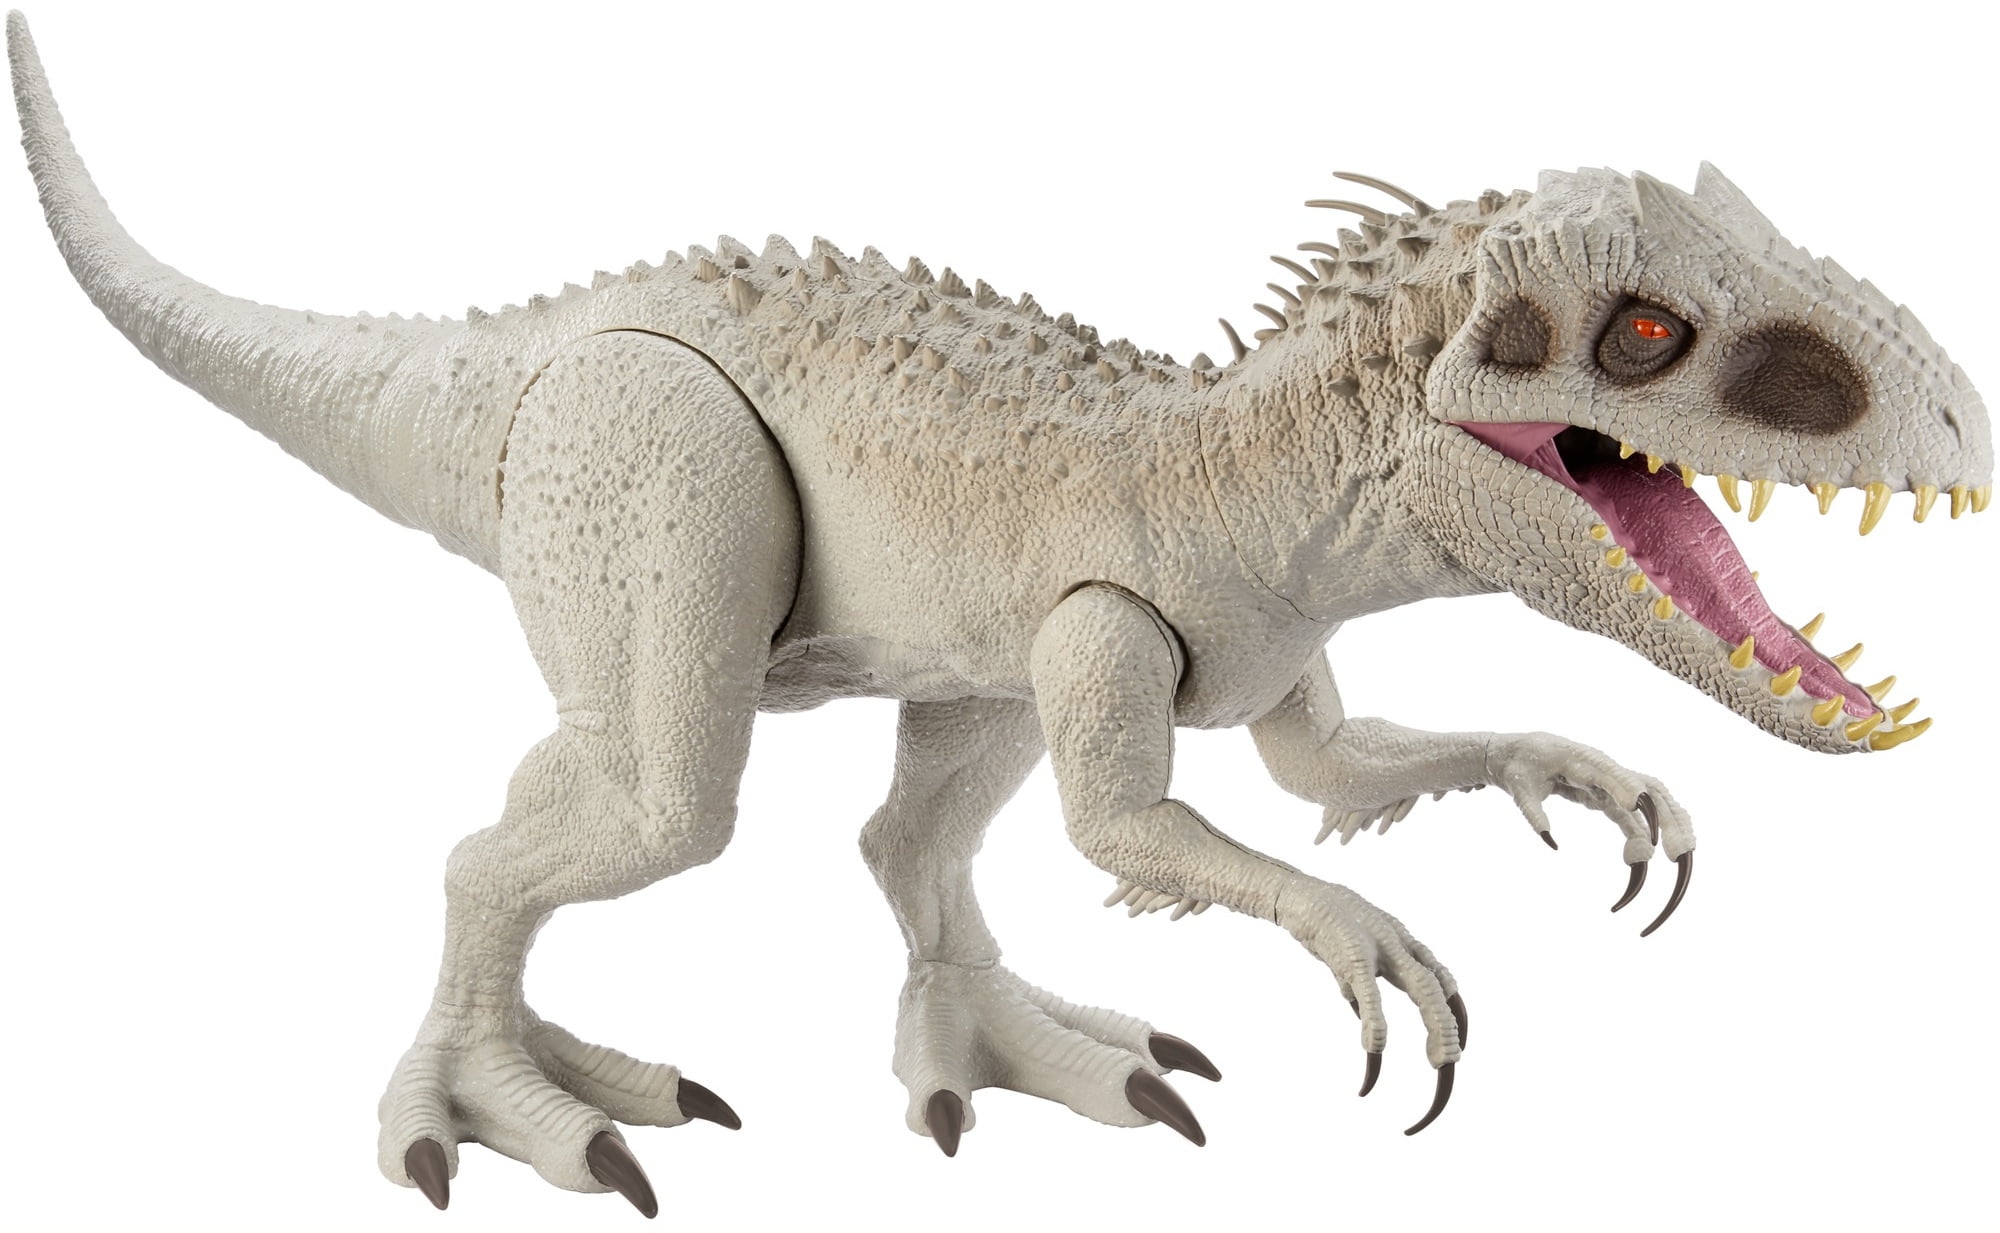 Details about   Fisher Price Imaginext Jurassic World Dinosaur Thrashing Indominous Rex